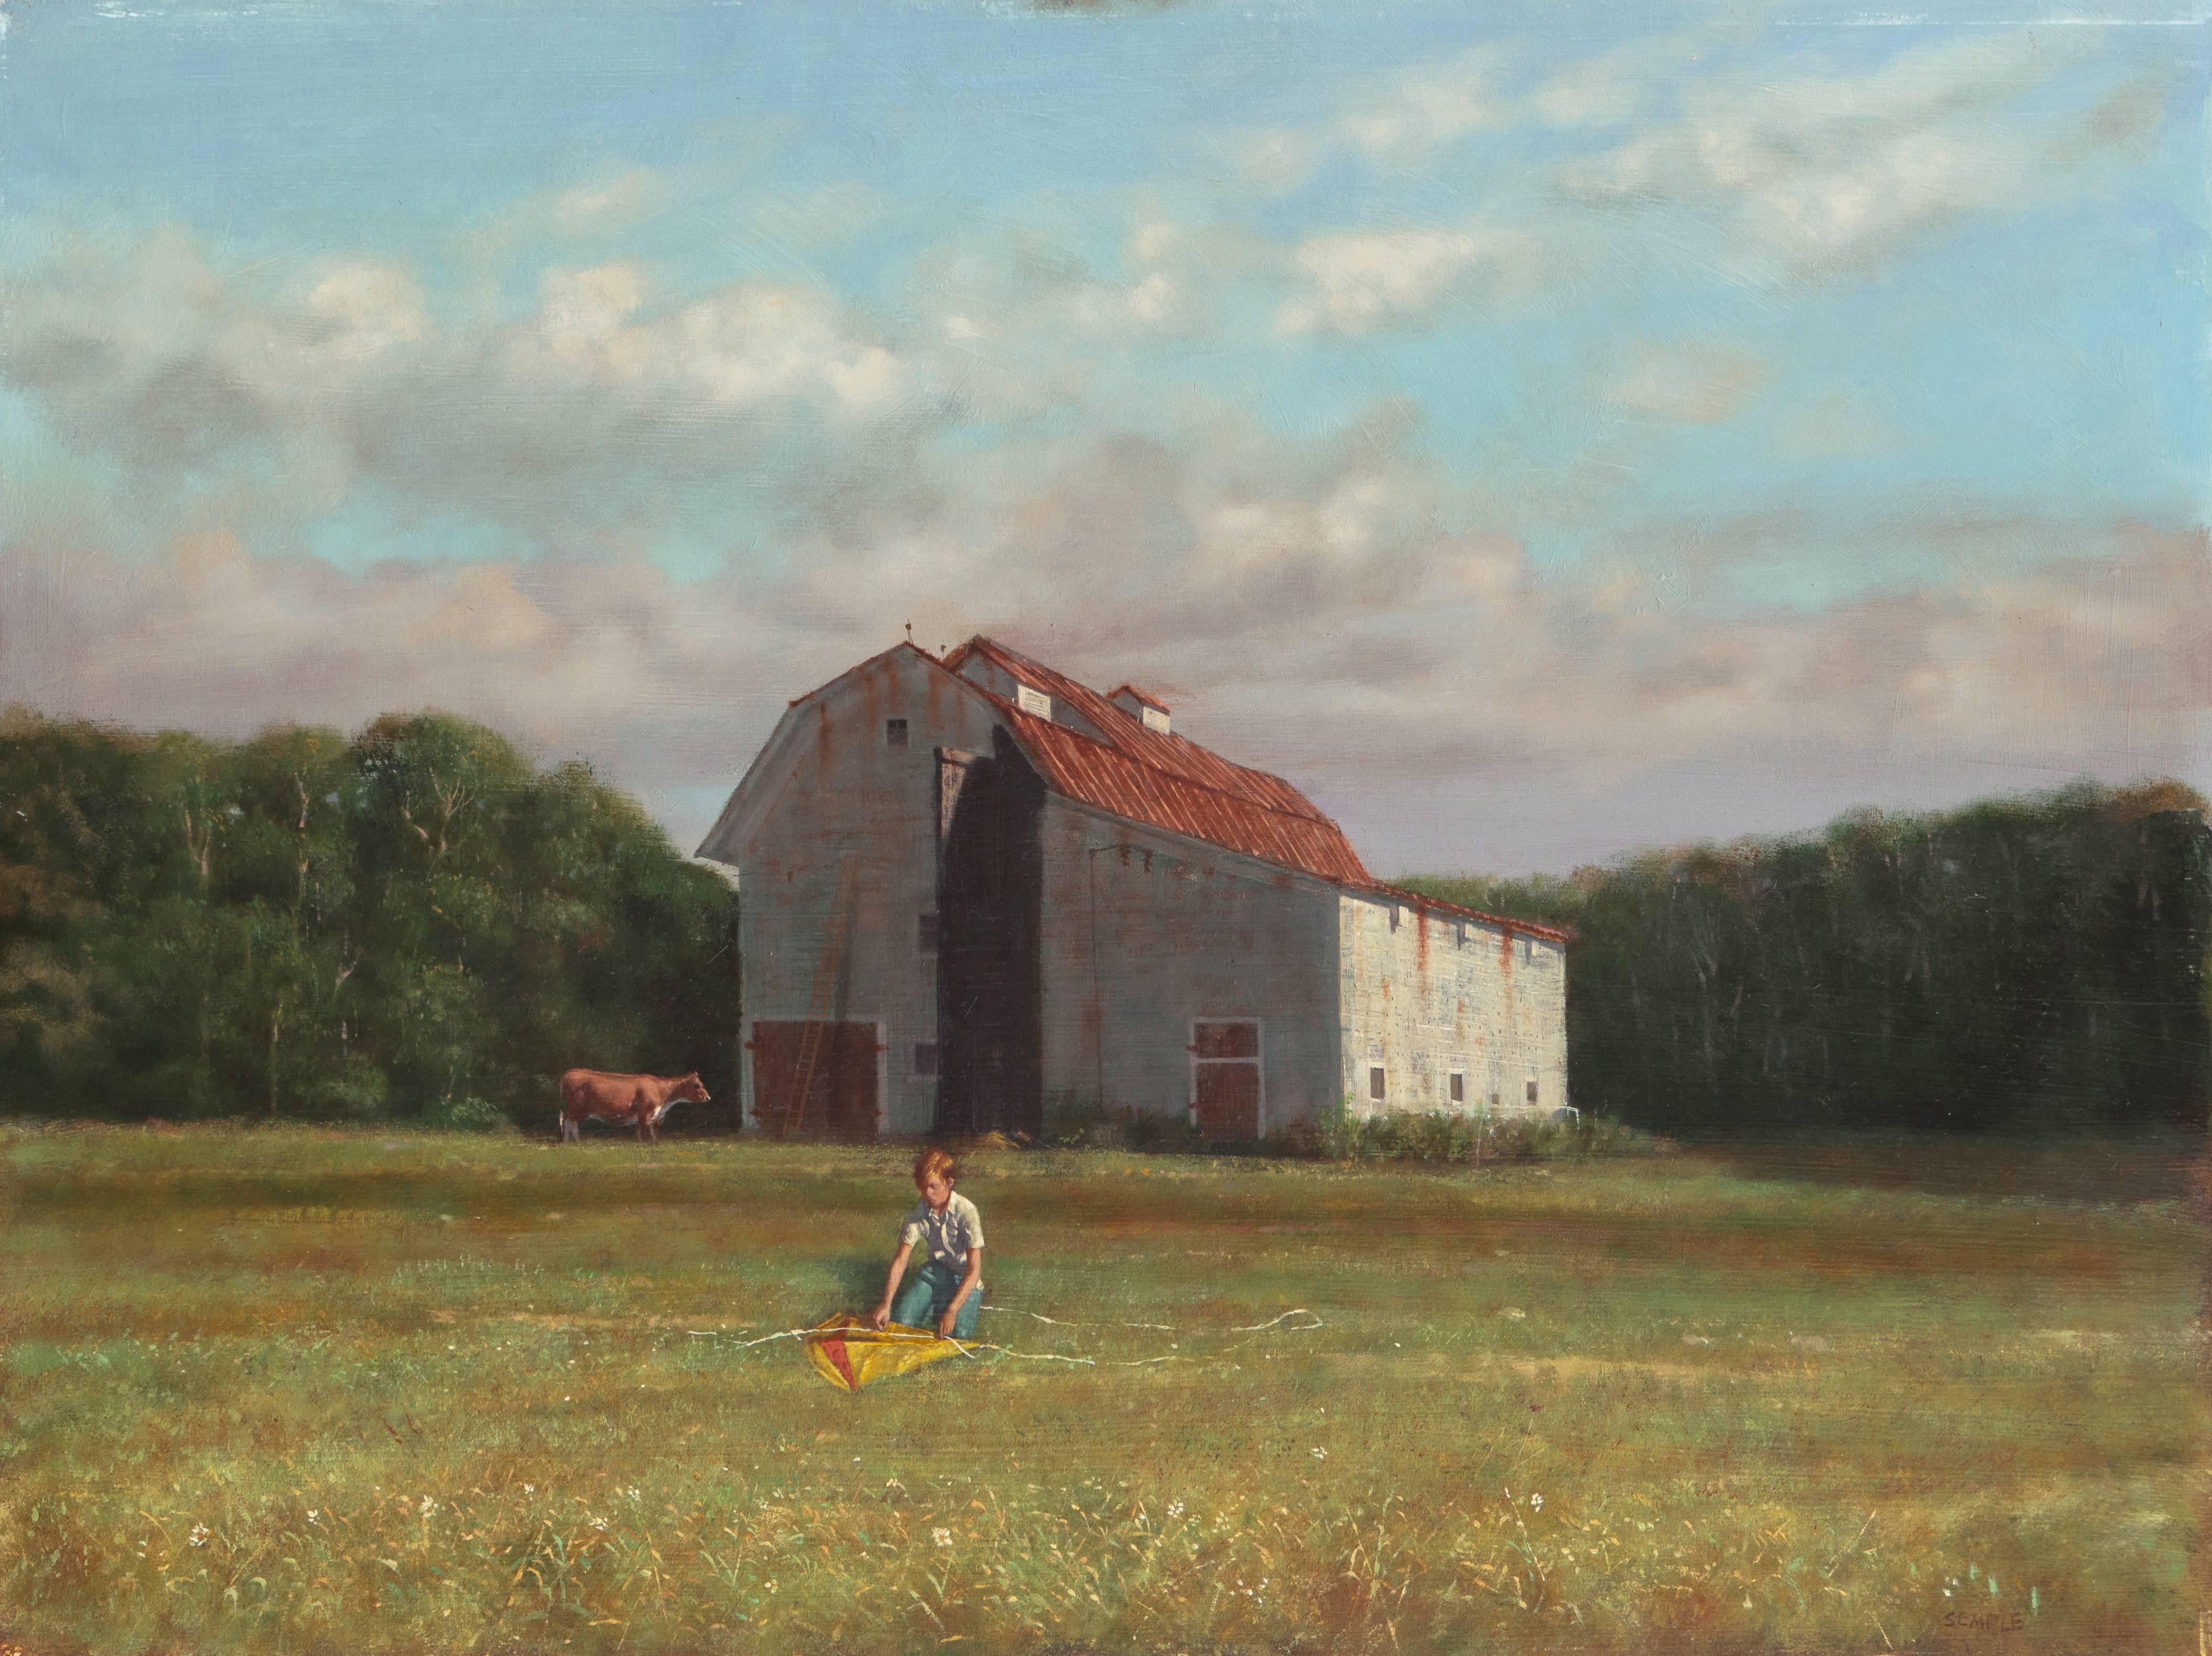 John Semple Landscape Painting - The Kite Flyer   (American Realism, Dutch Barn, Rural Childhood)